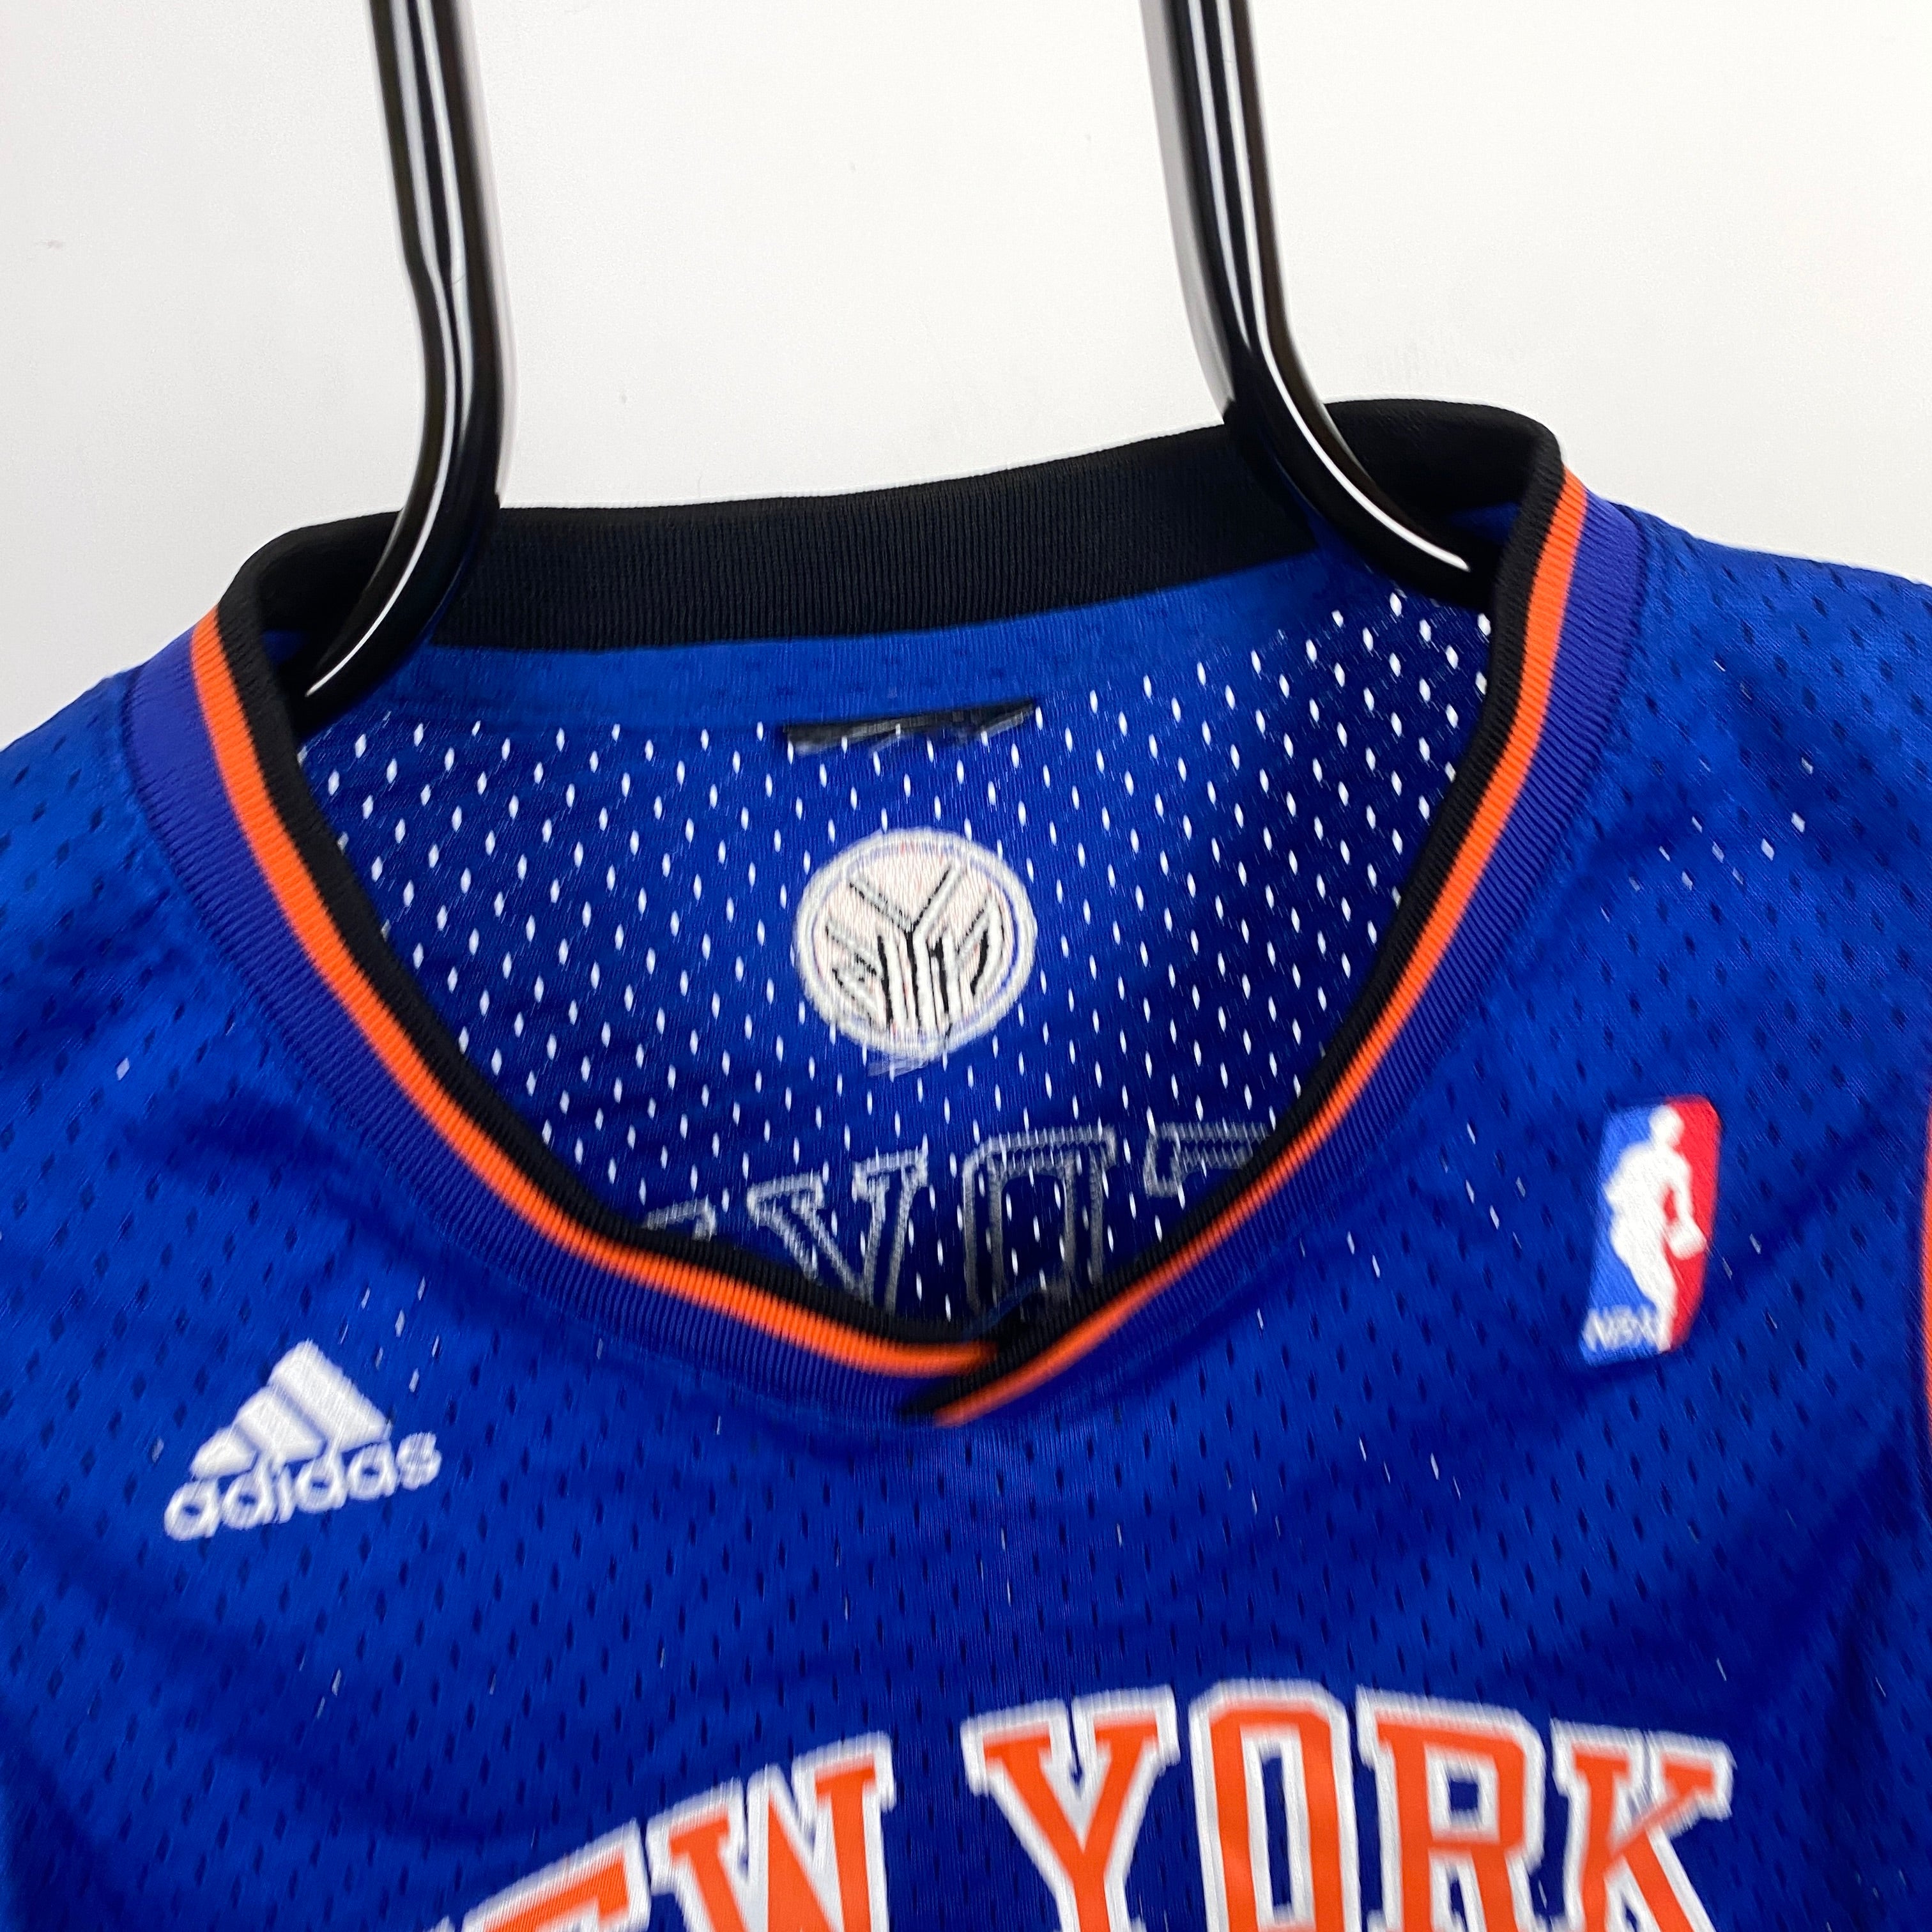 Retro New York Frye Basketball Vest Jersey T-Shirt Blue Small